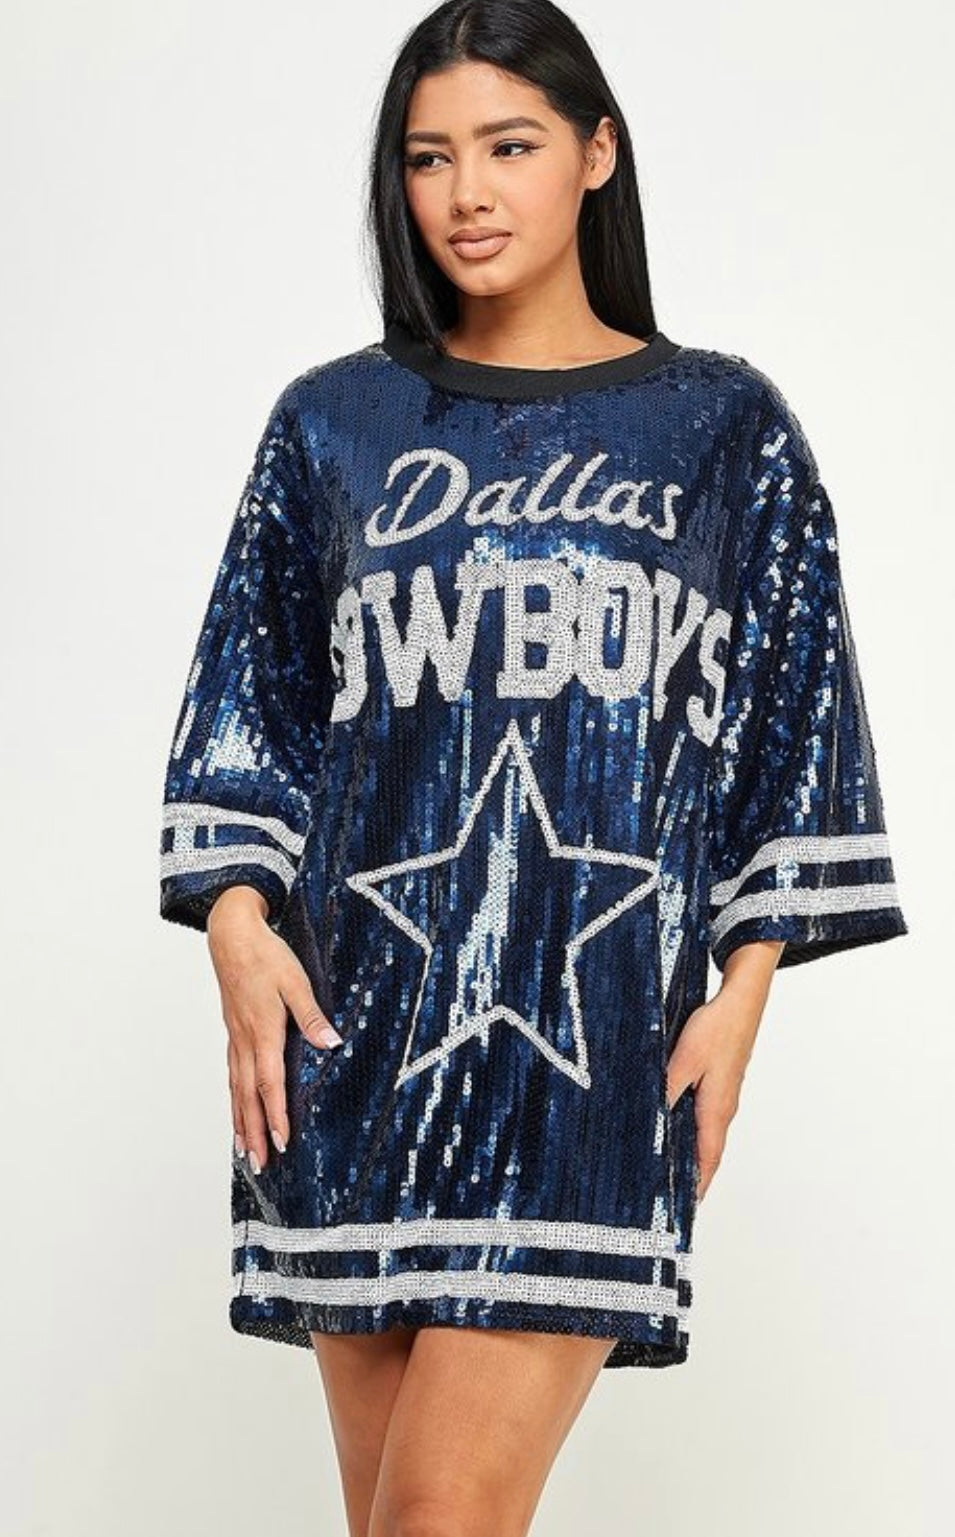 We Dem Boyz Dallas Sequins Jersey Dress/Top